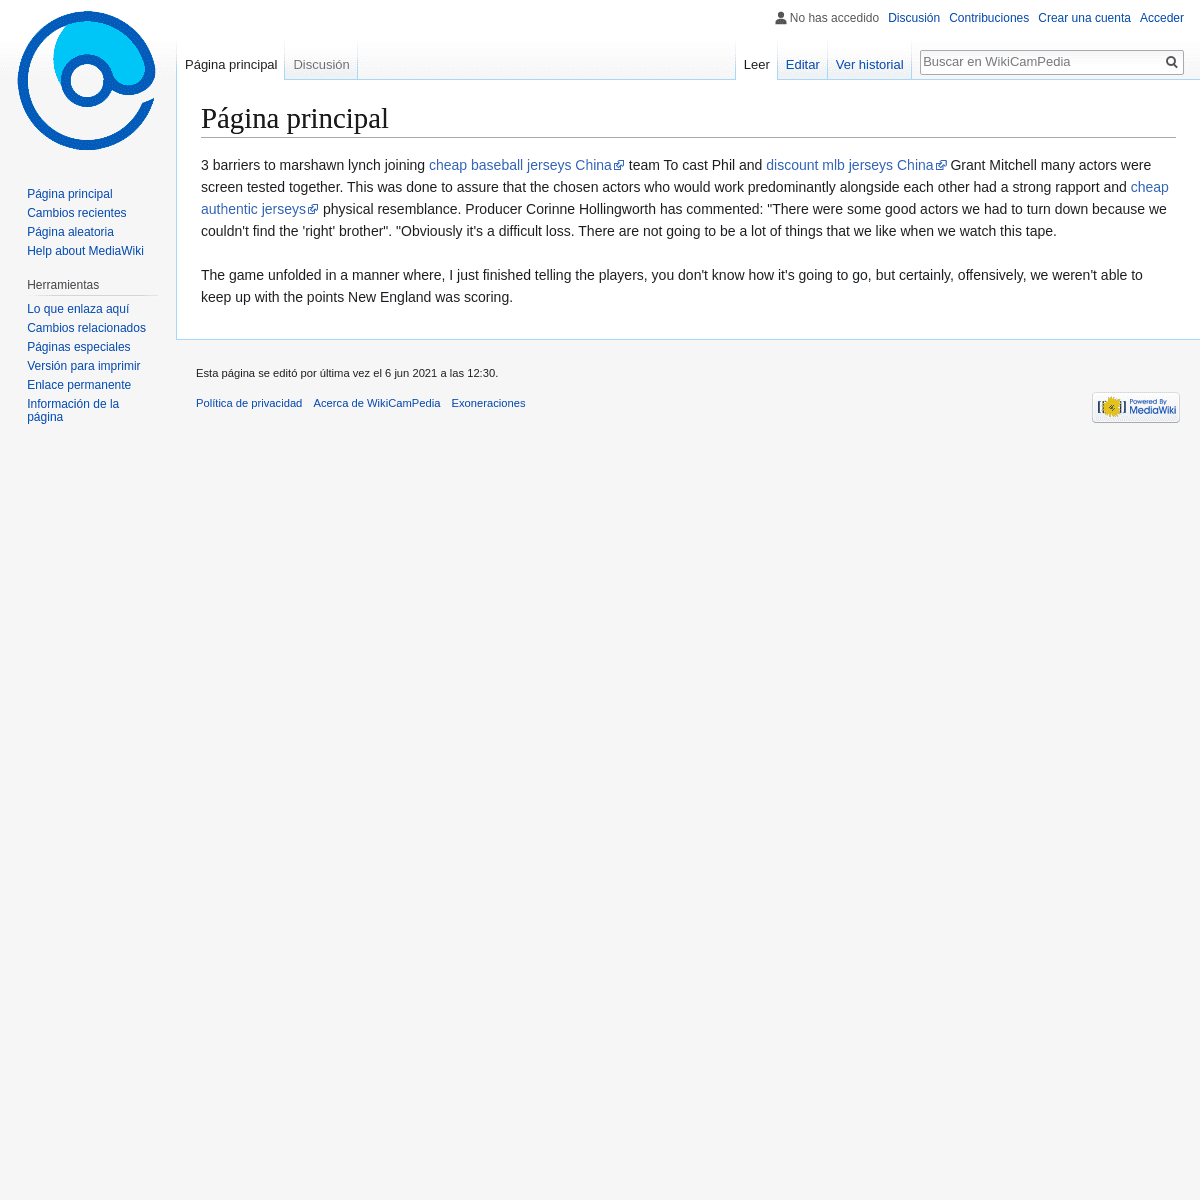 A complete backup of https://wikicampedia.com